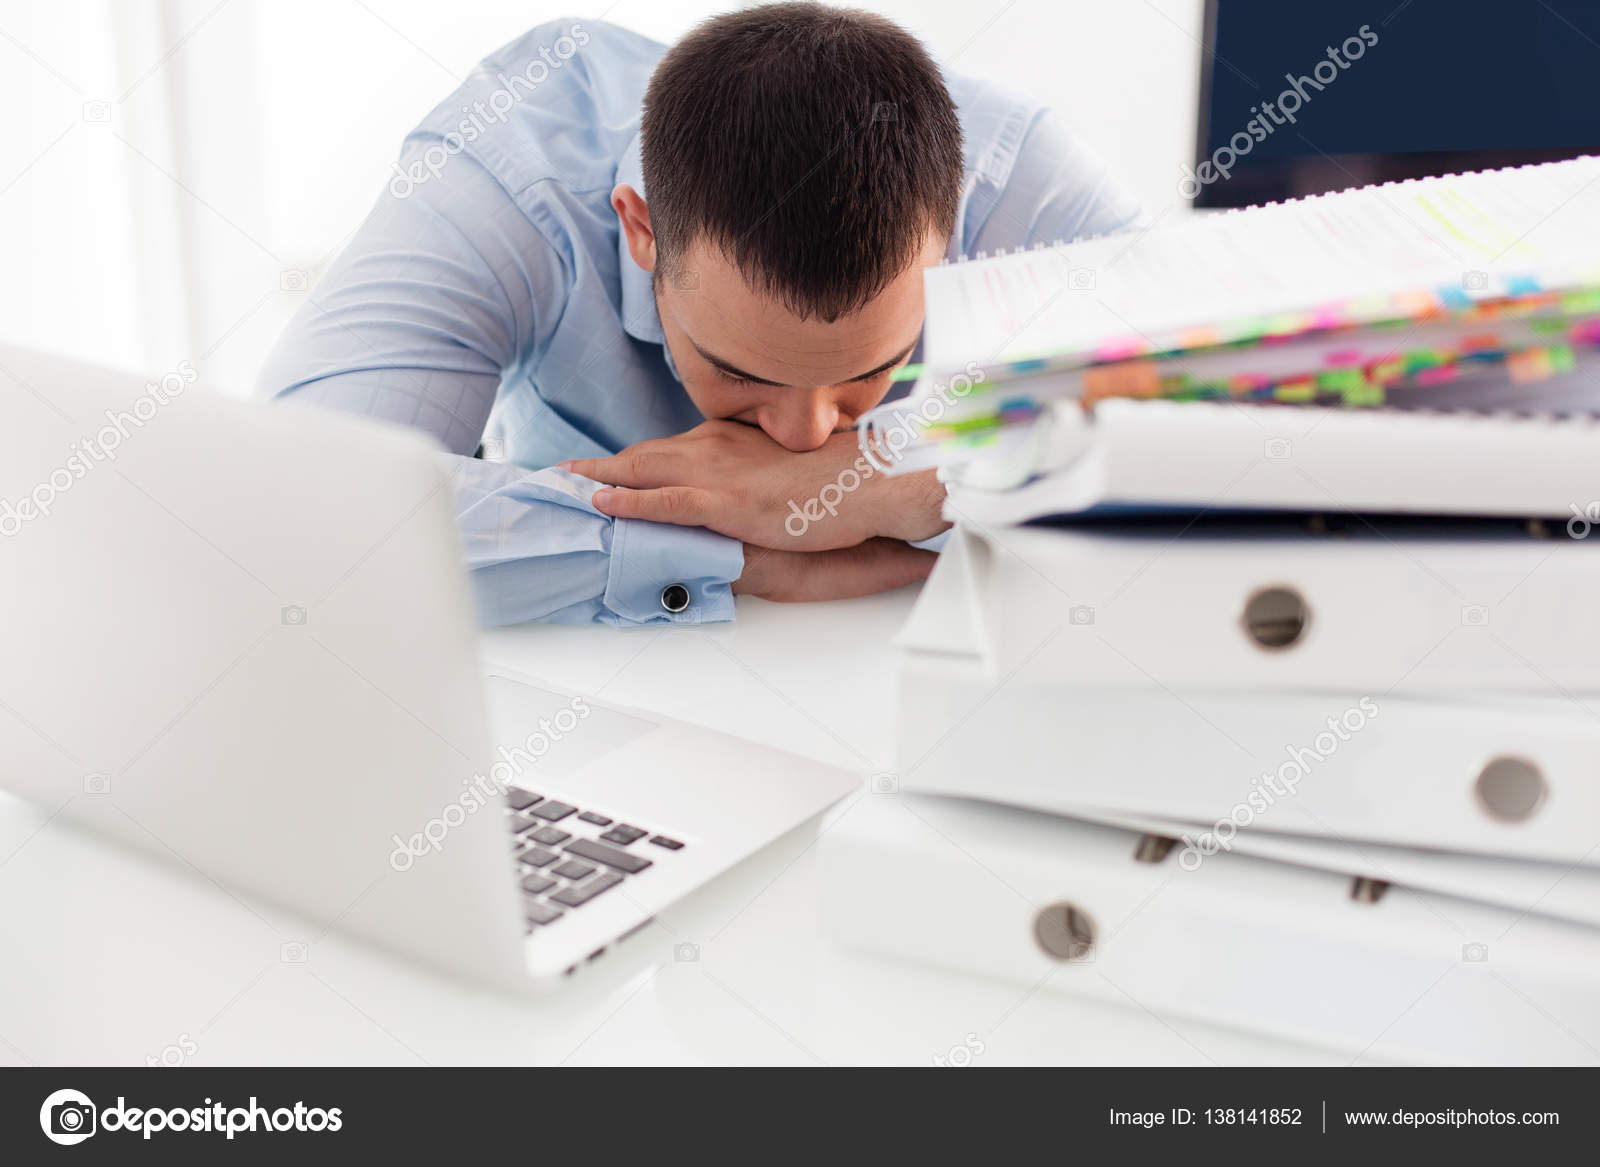 Businessman Asleep At Desk Stock Photo C Londondeposit 138141852